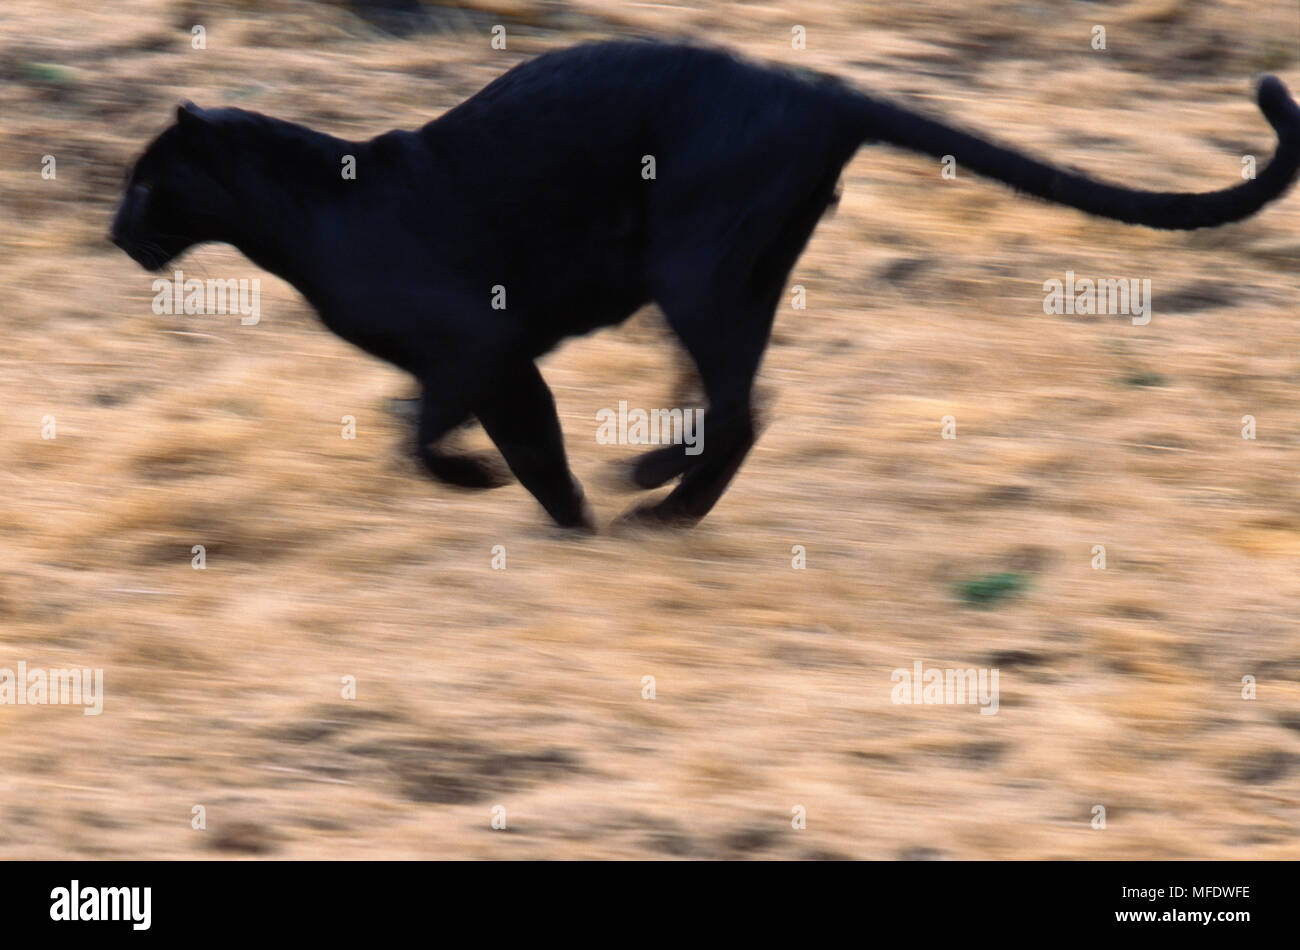 BLACK PANTHER Panthera pardus running Stock Photo